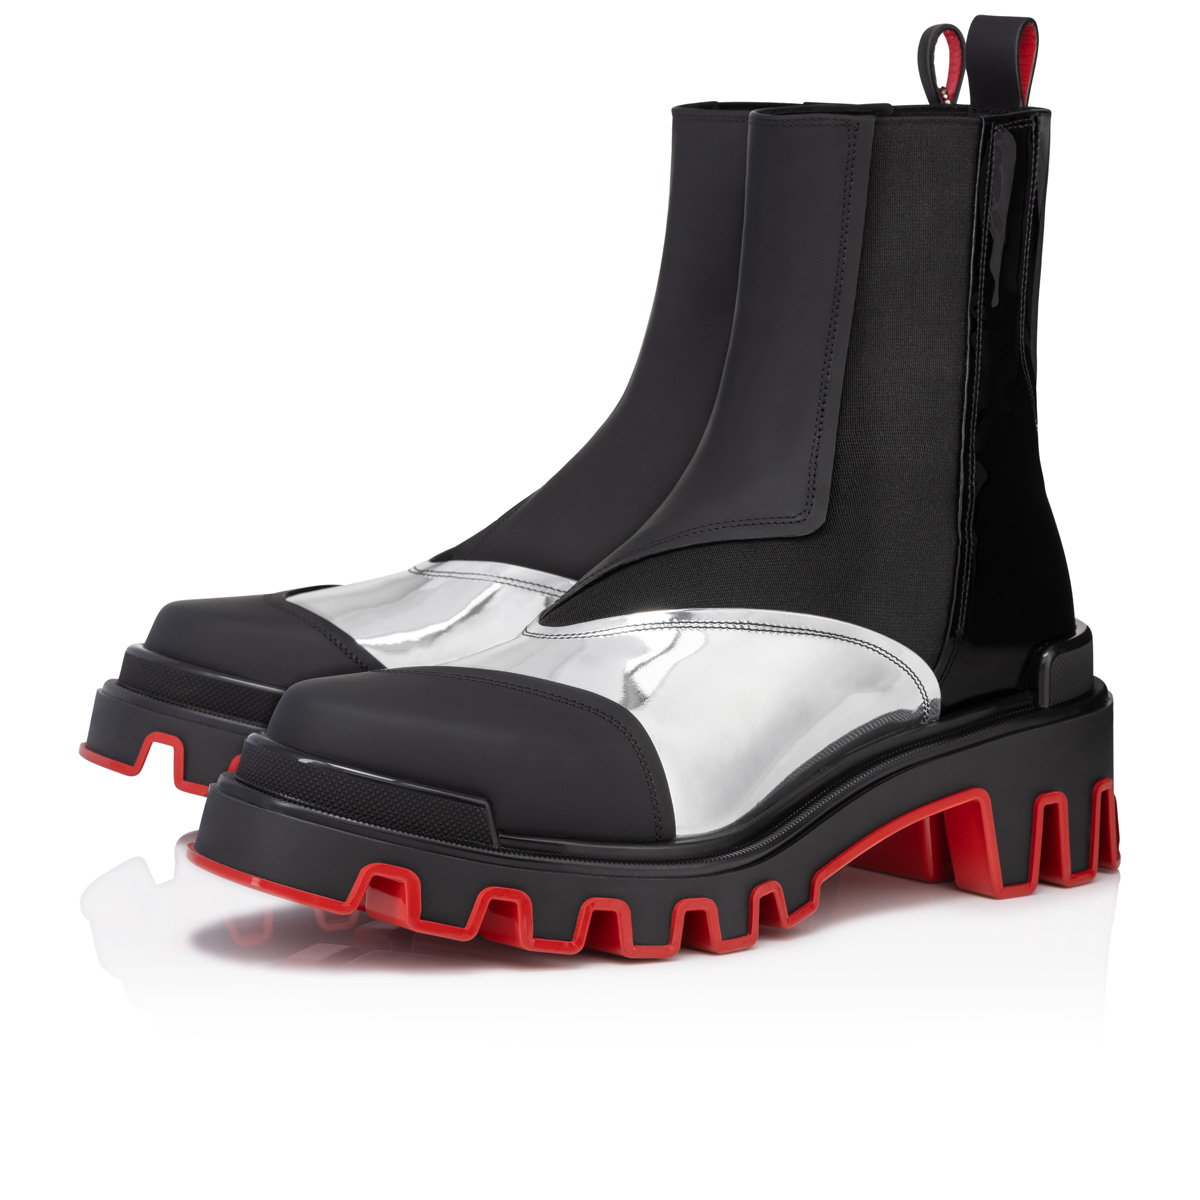 Vibrano - Boots - Calf leather - Black - Christian Louboutin